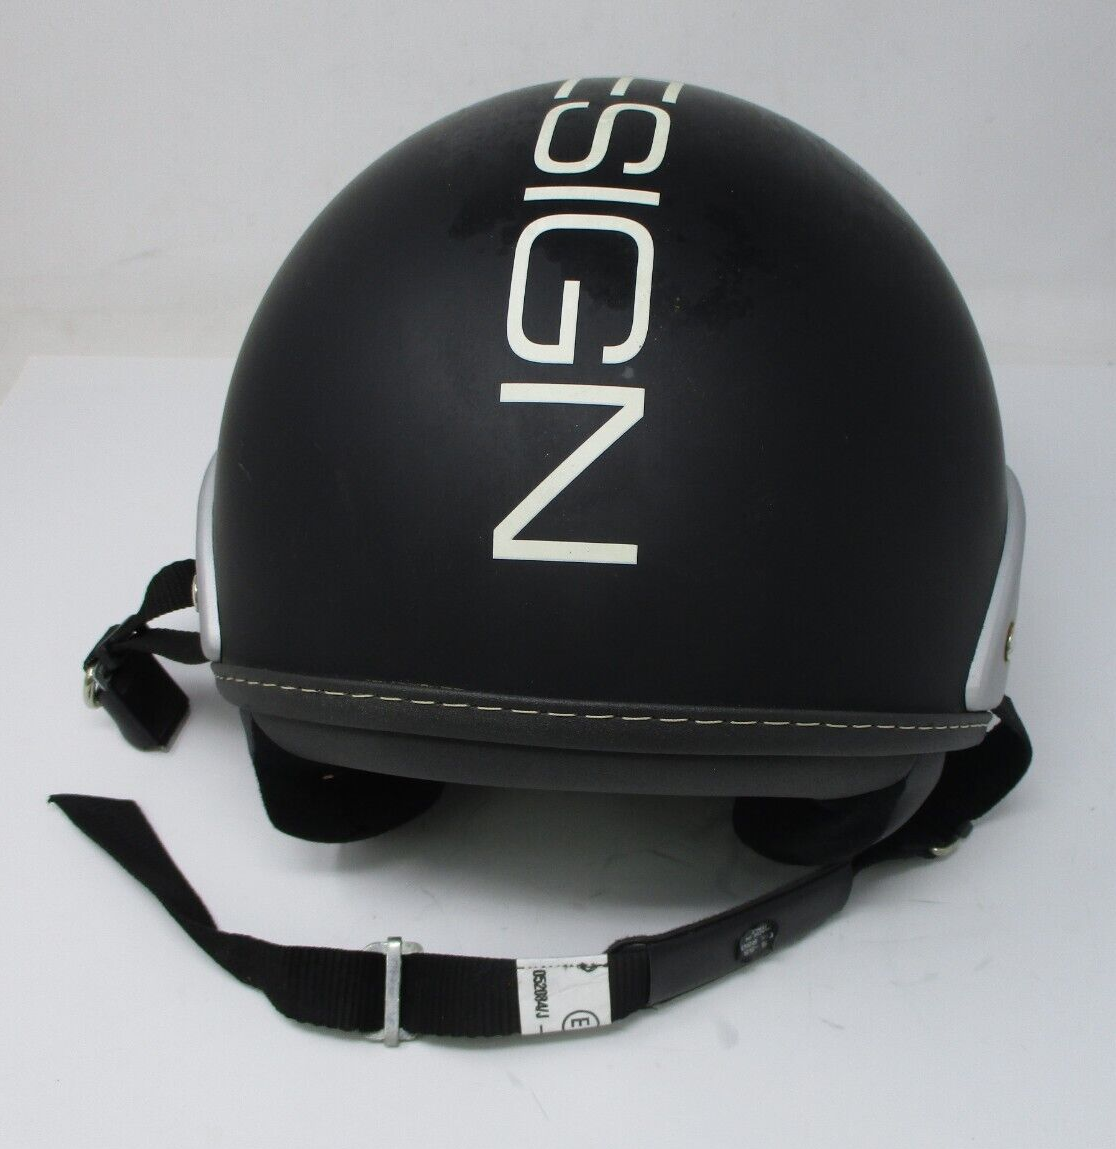 MONO DESIGN  Minimomo Jet Helmet Size Small 55